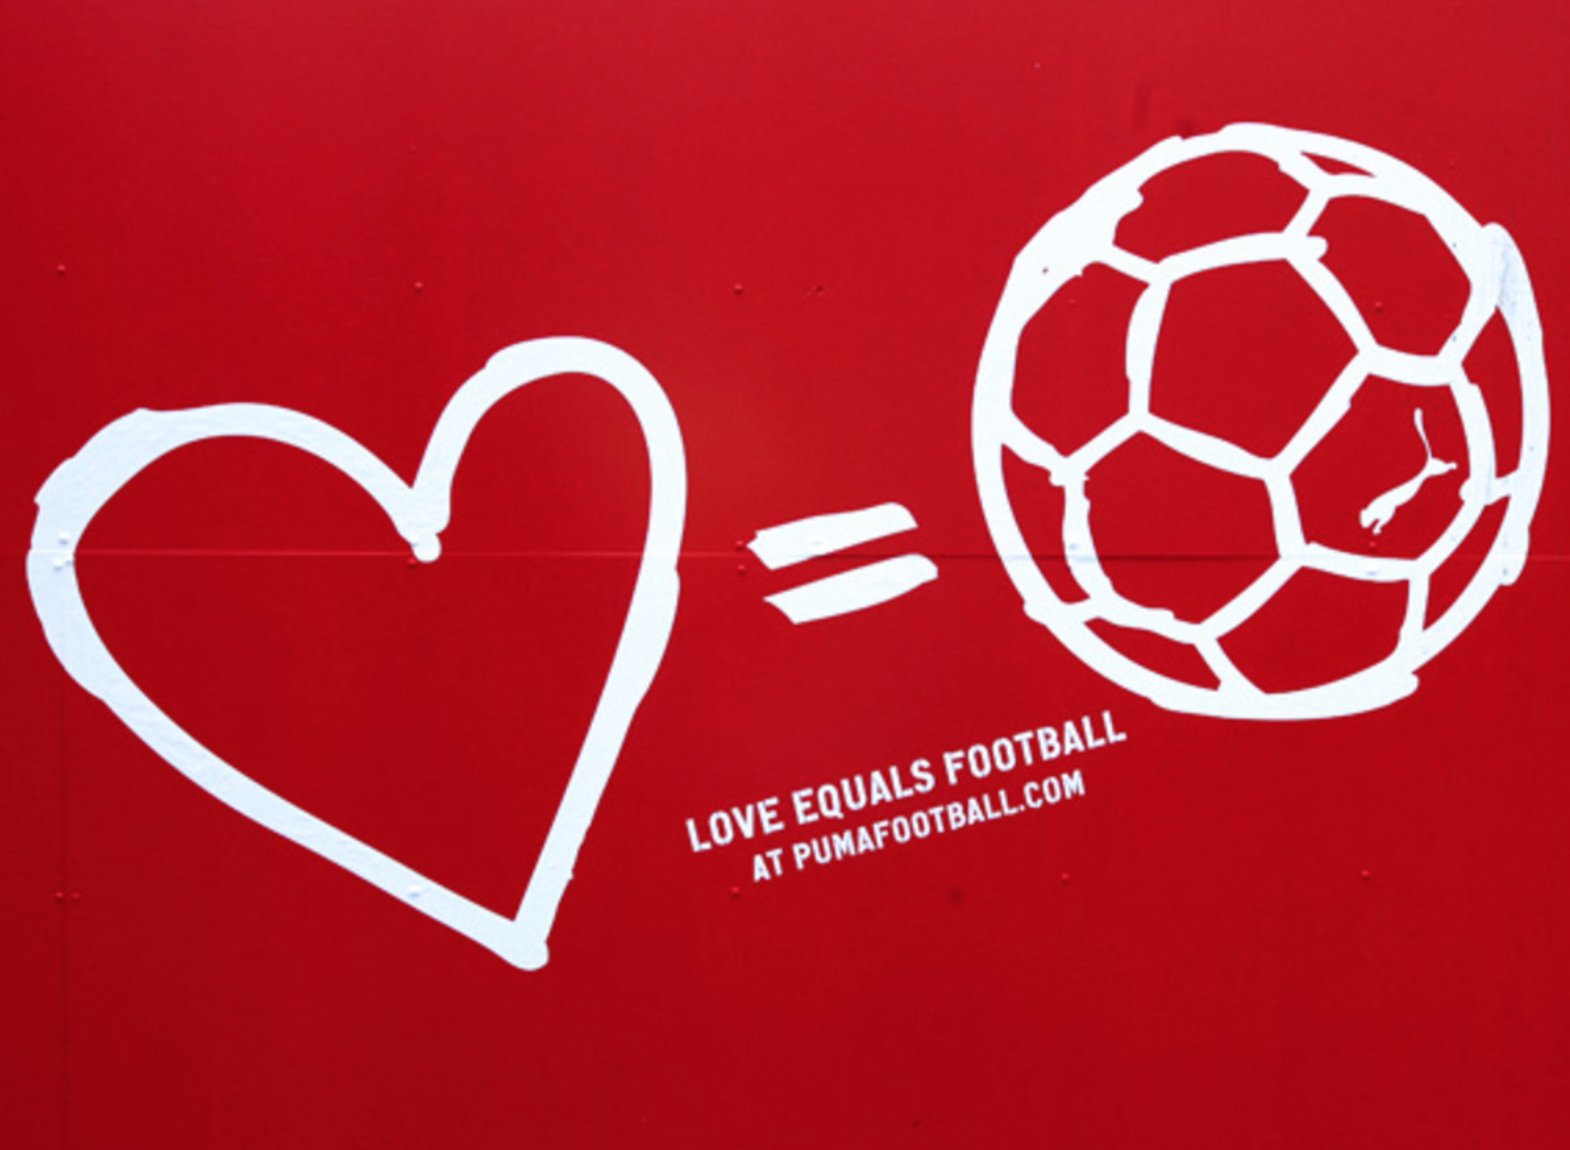 Обожаю футбол. Любовь к футболу. Love equals Football. Puma Football Love. Любовь к футболу картинки.